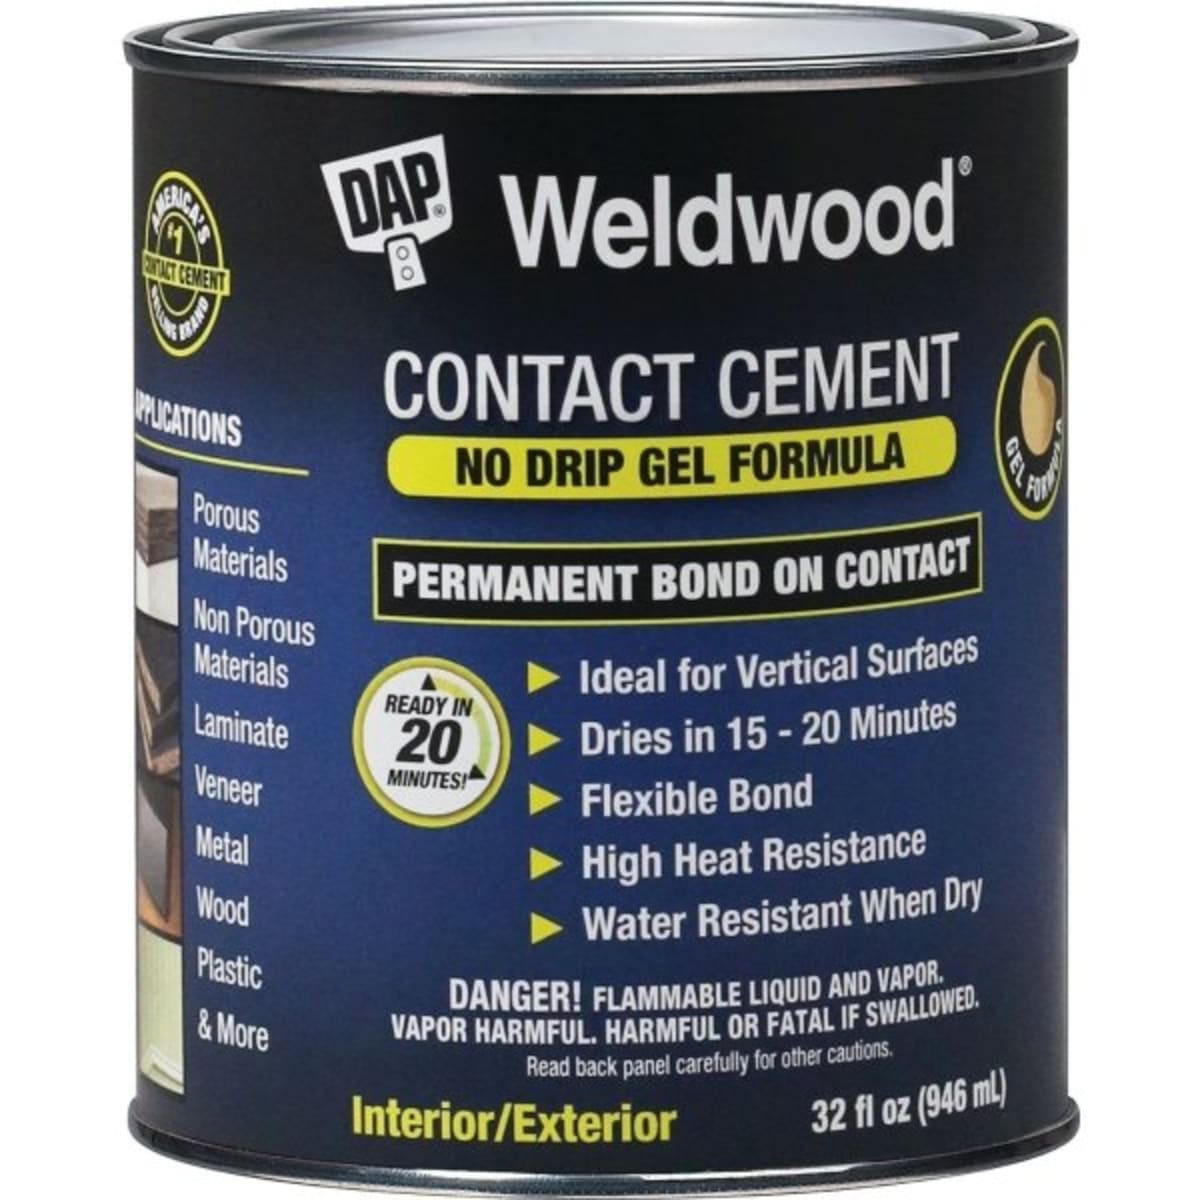 Weldwood Contact Cement - 32 fl oz can